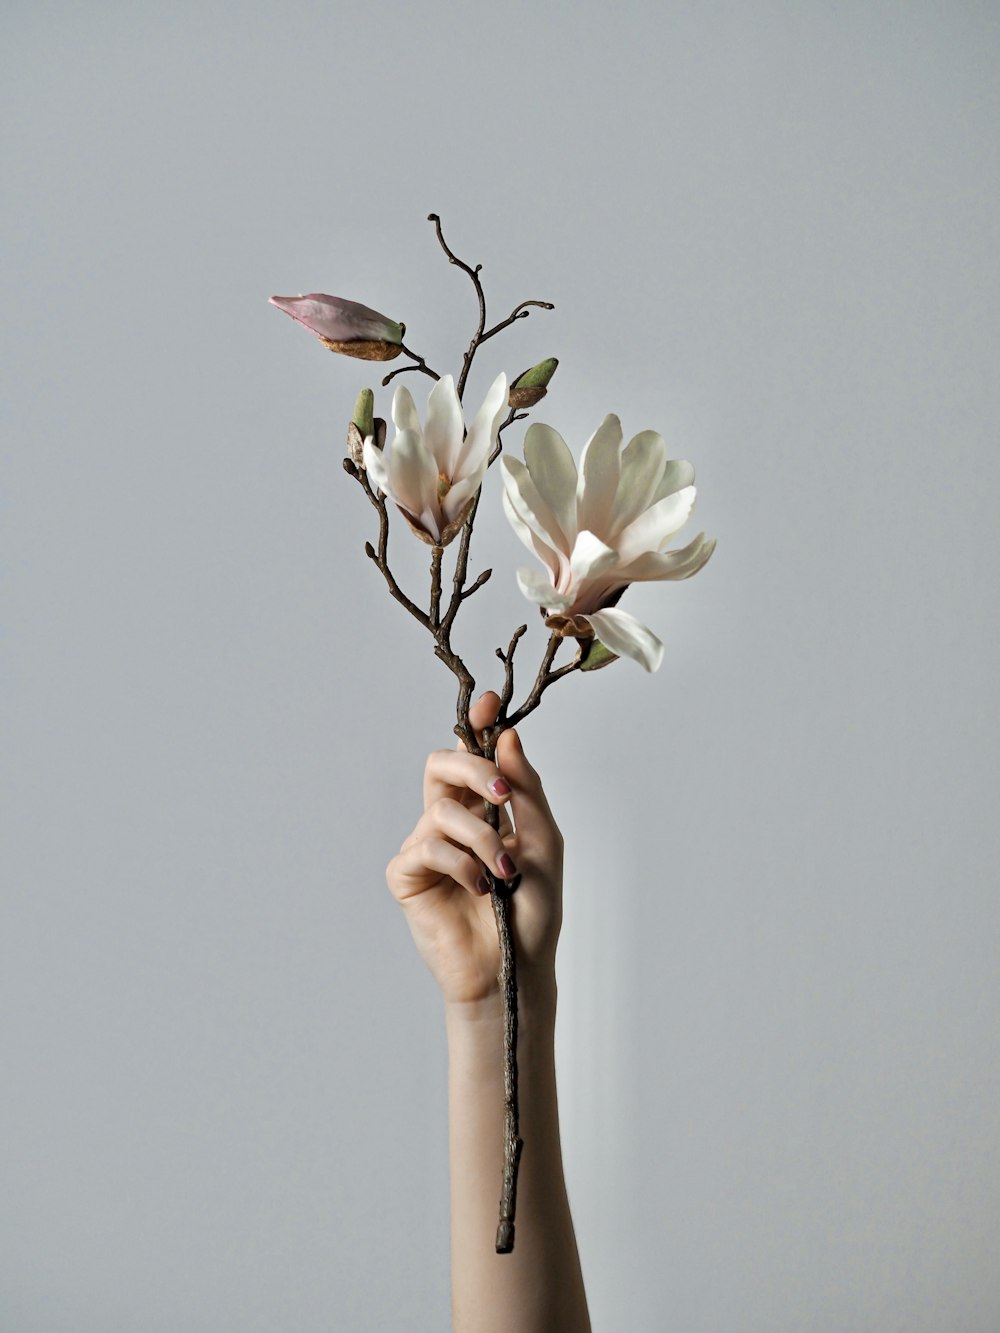 person holding white petaled flower